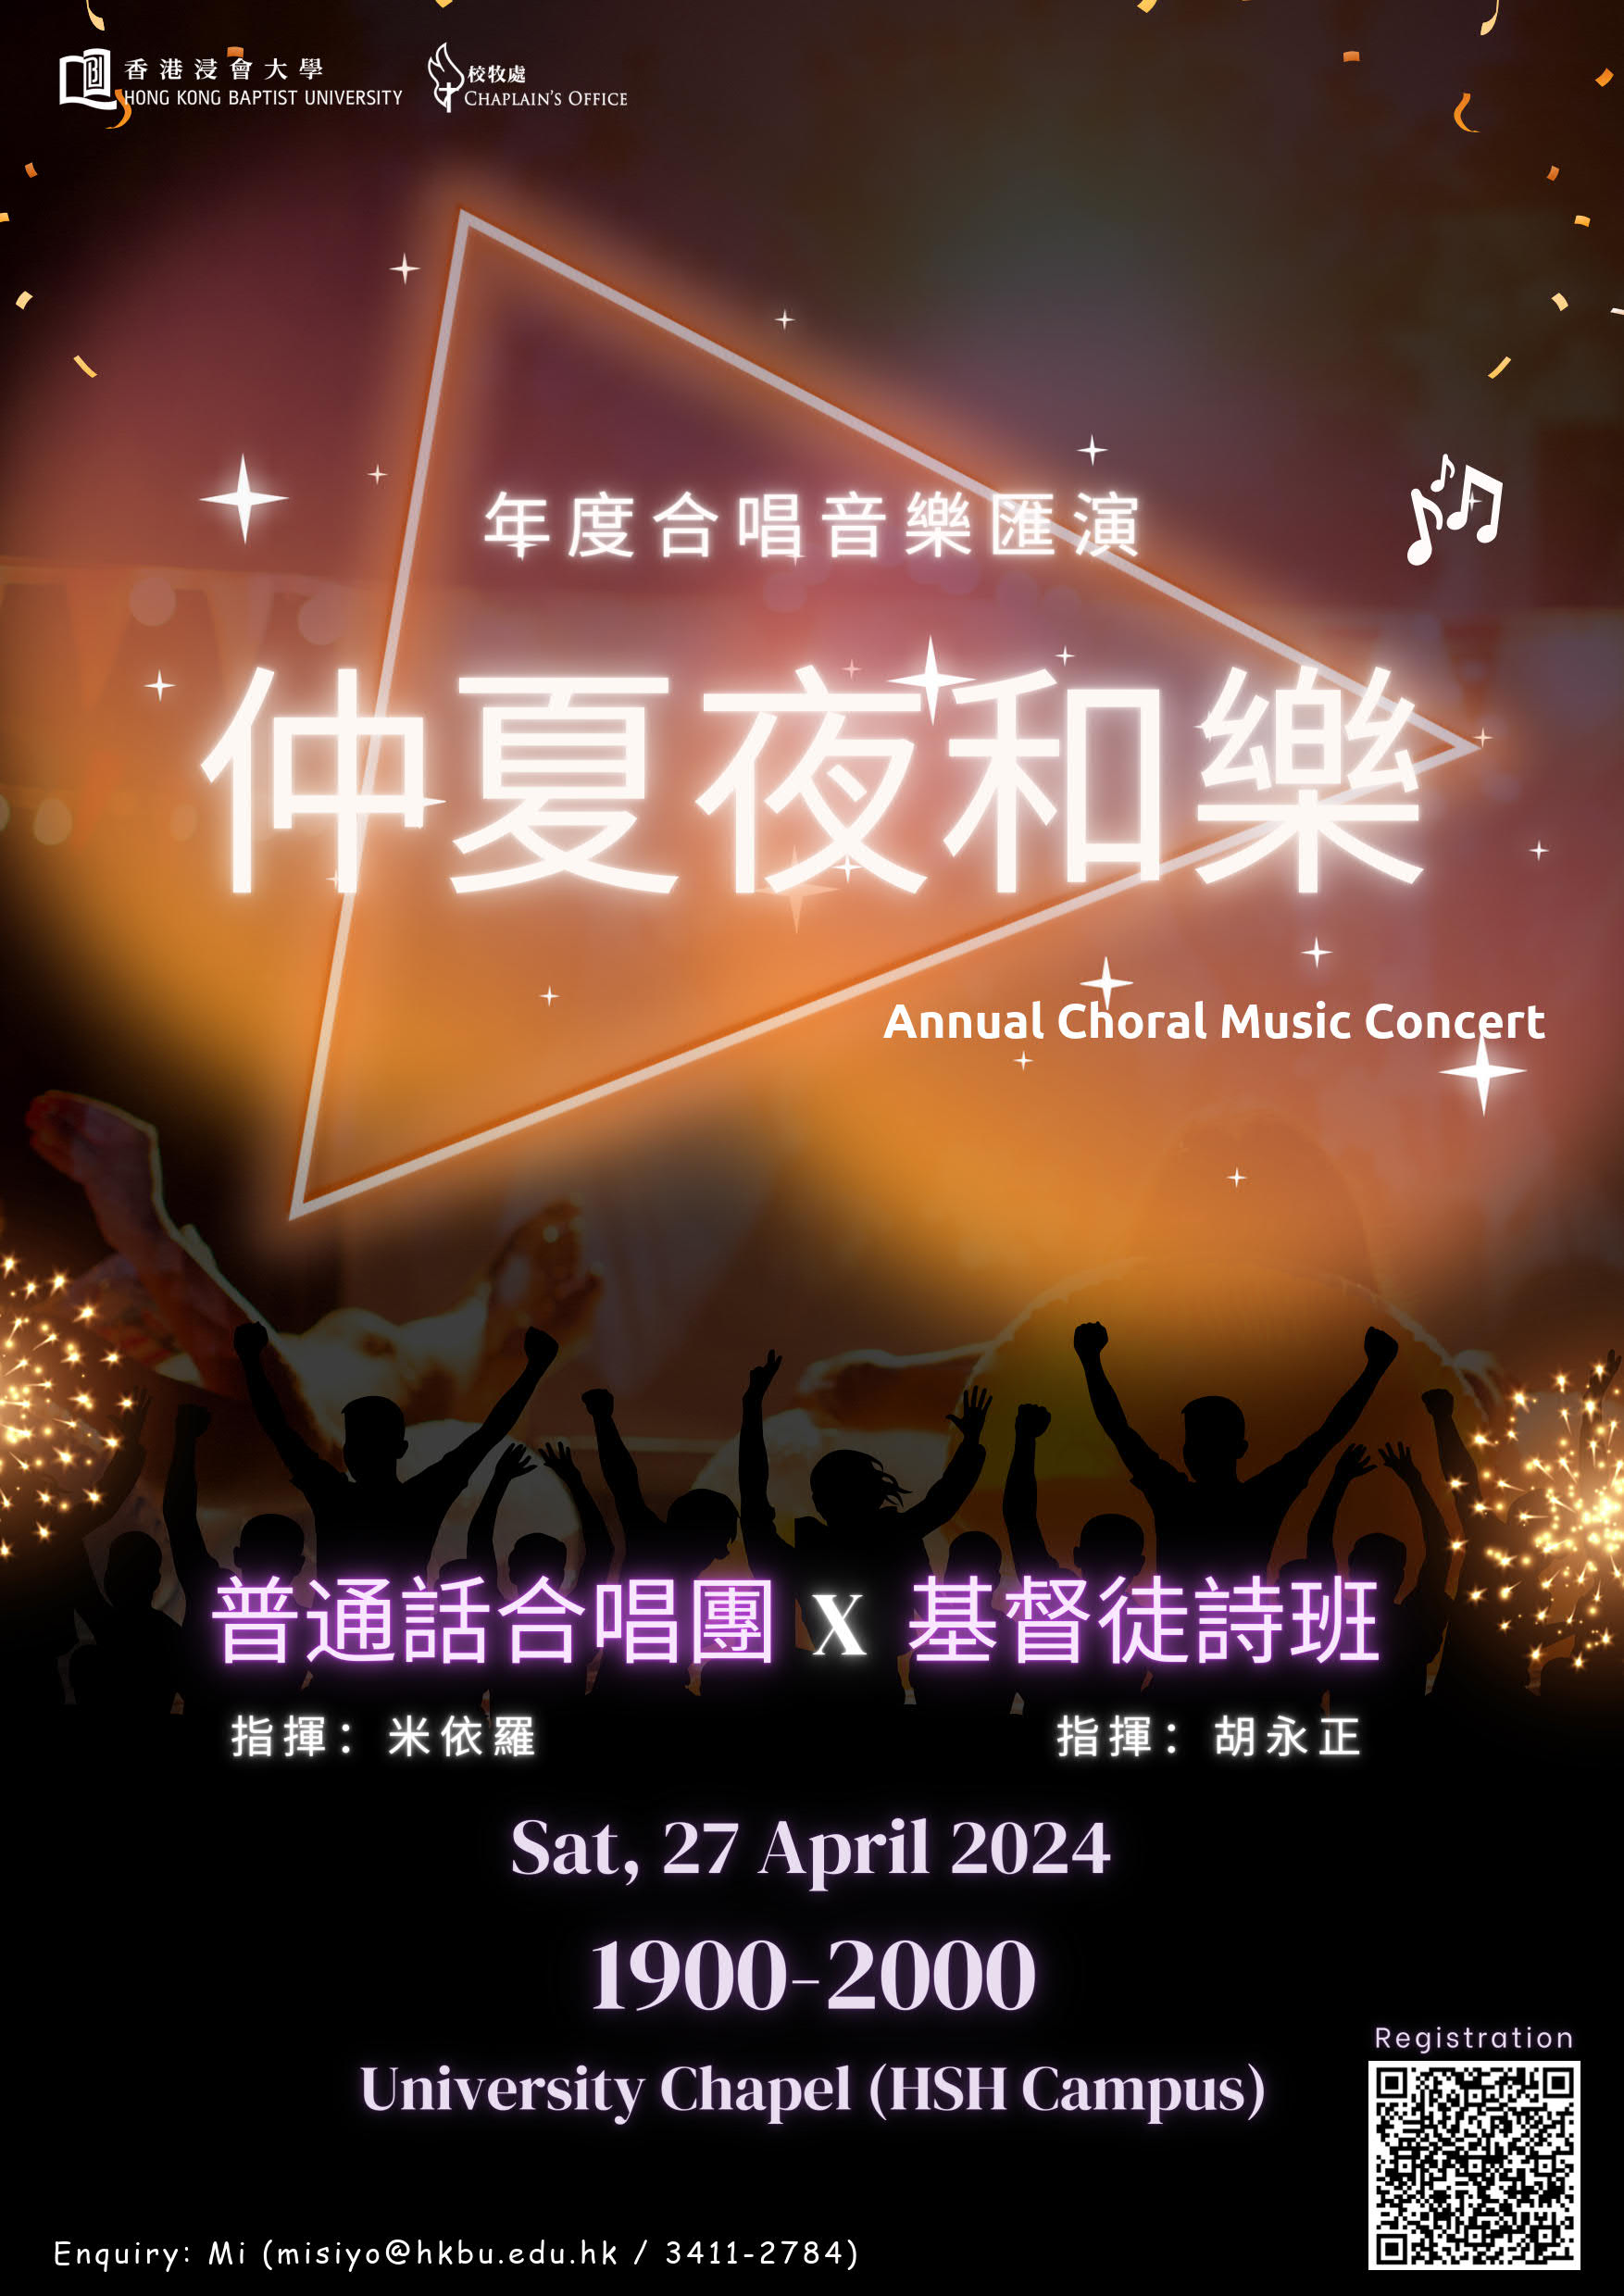 Annual Choral Music Concert